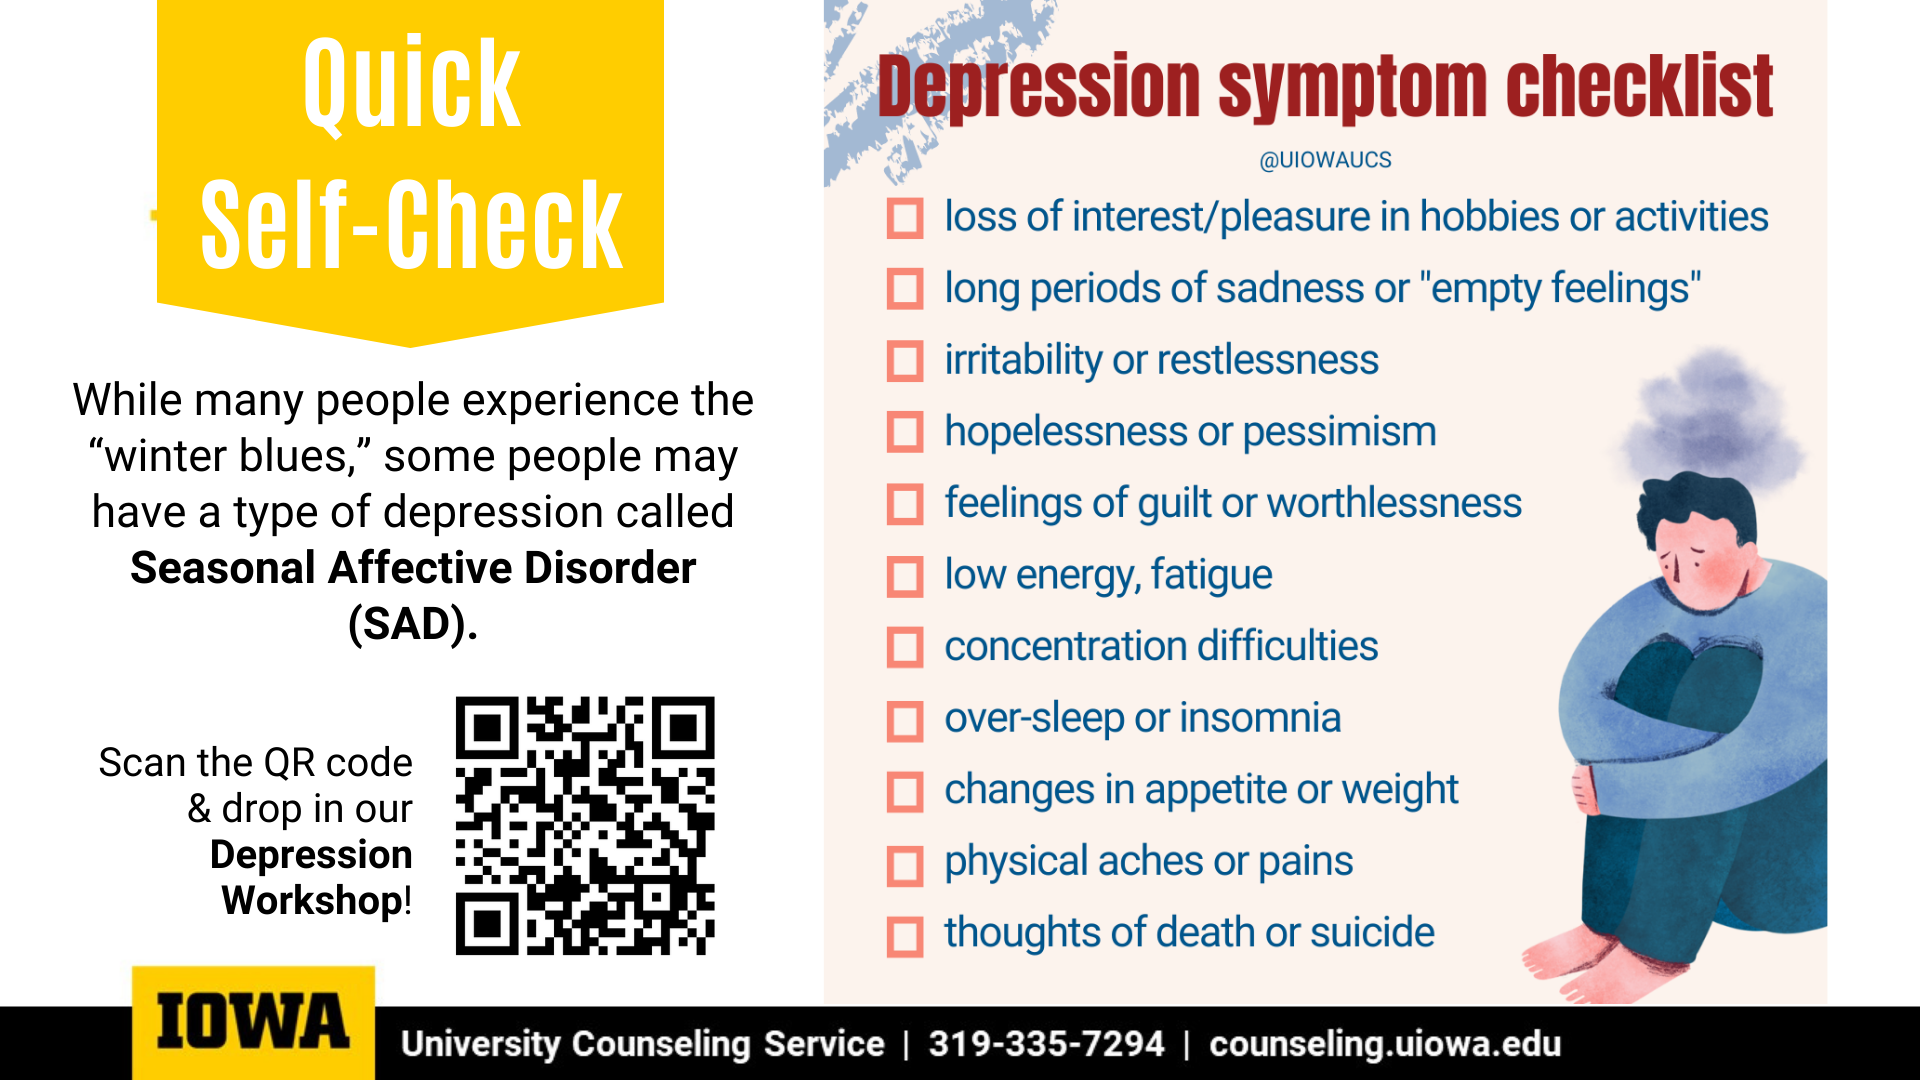 Depression Symptom Checklist